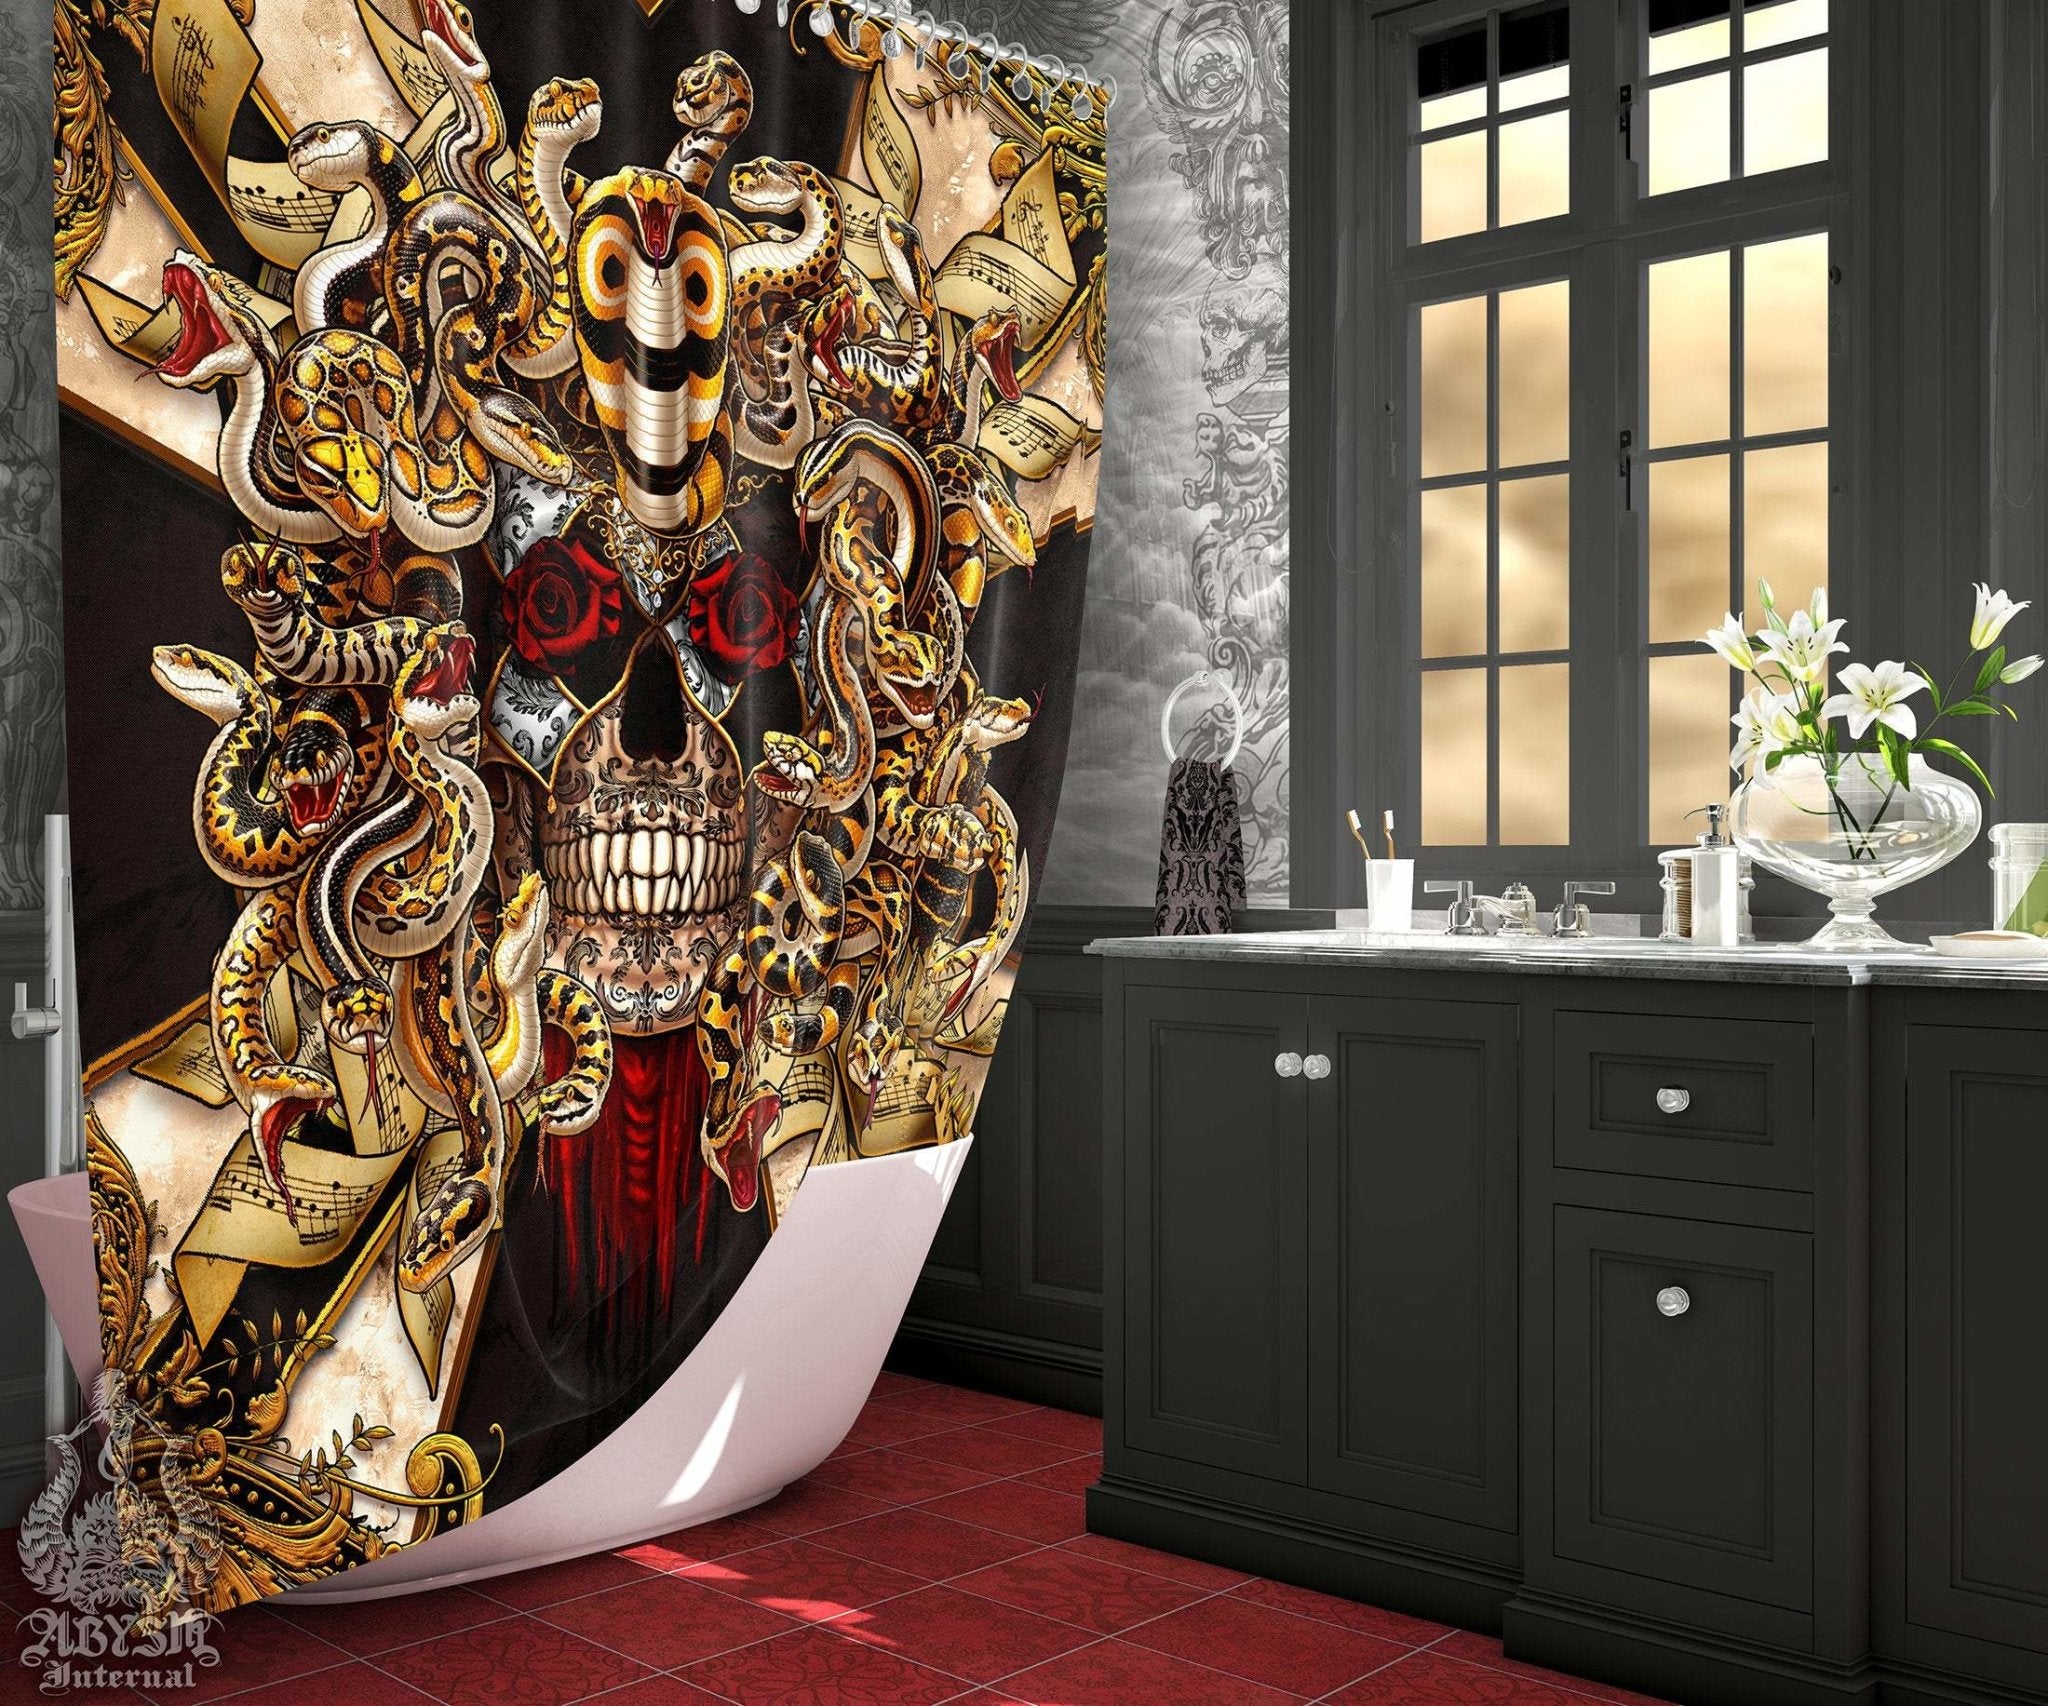 Skull Shower Curtain, Medusa, Gothic Bathroom Decor, Venice Carnival - Black Harlequin, Gold Snakes - Abysm Internal